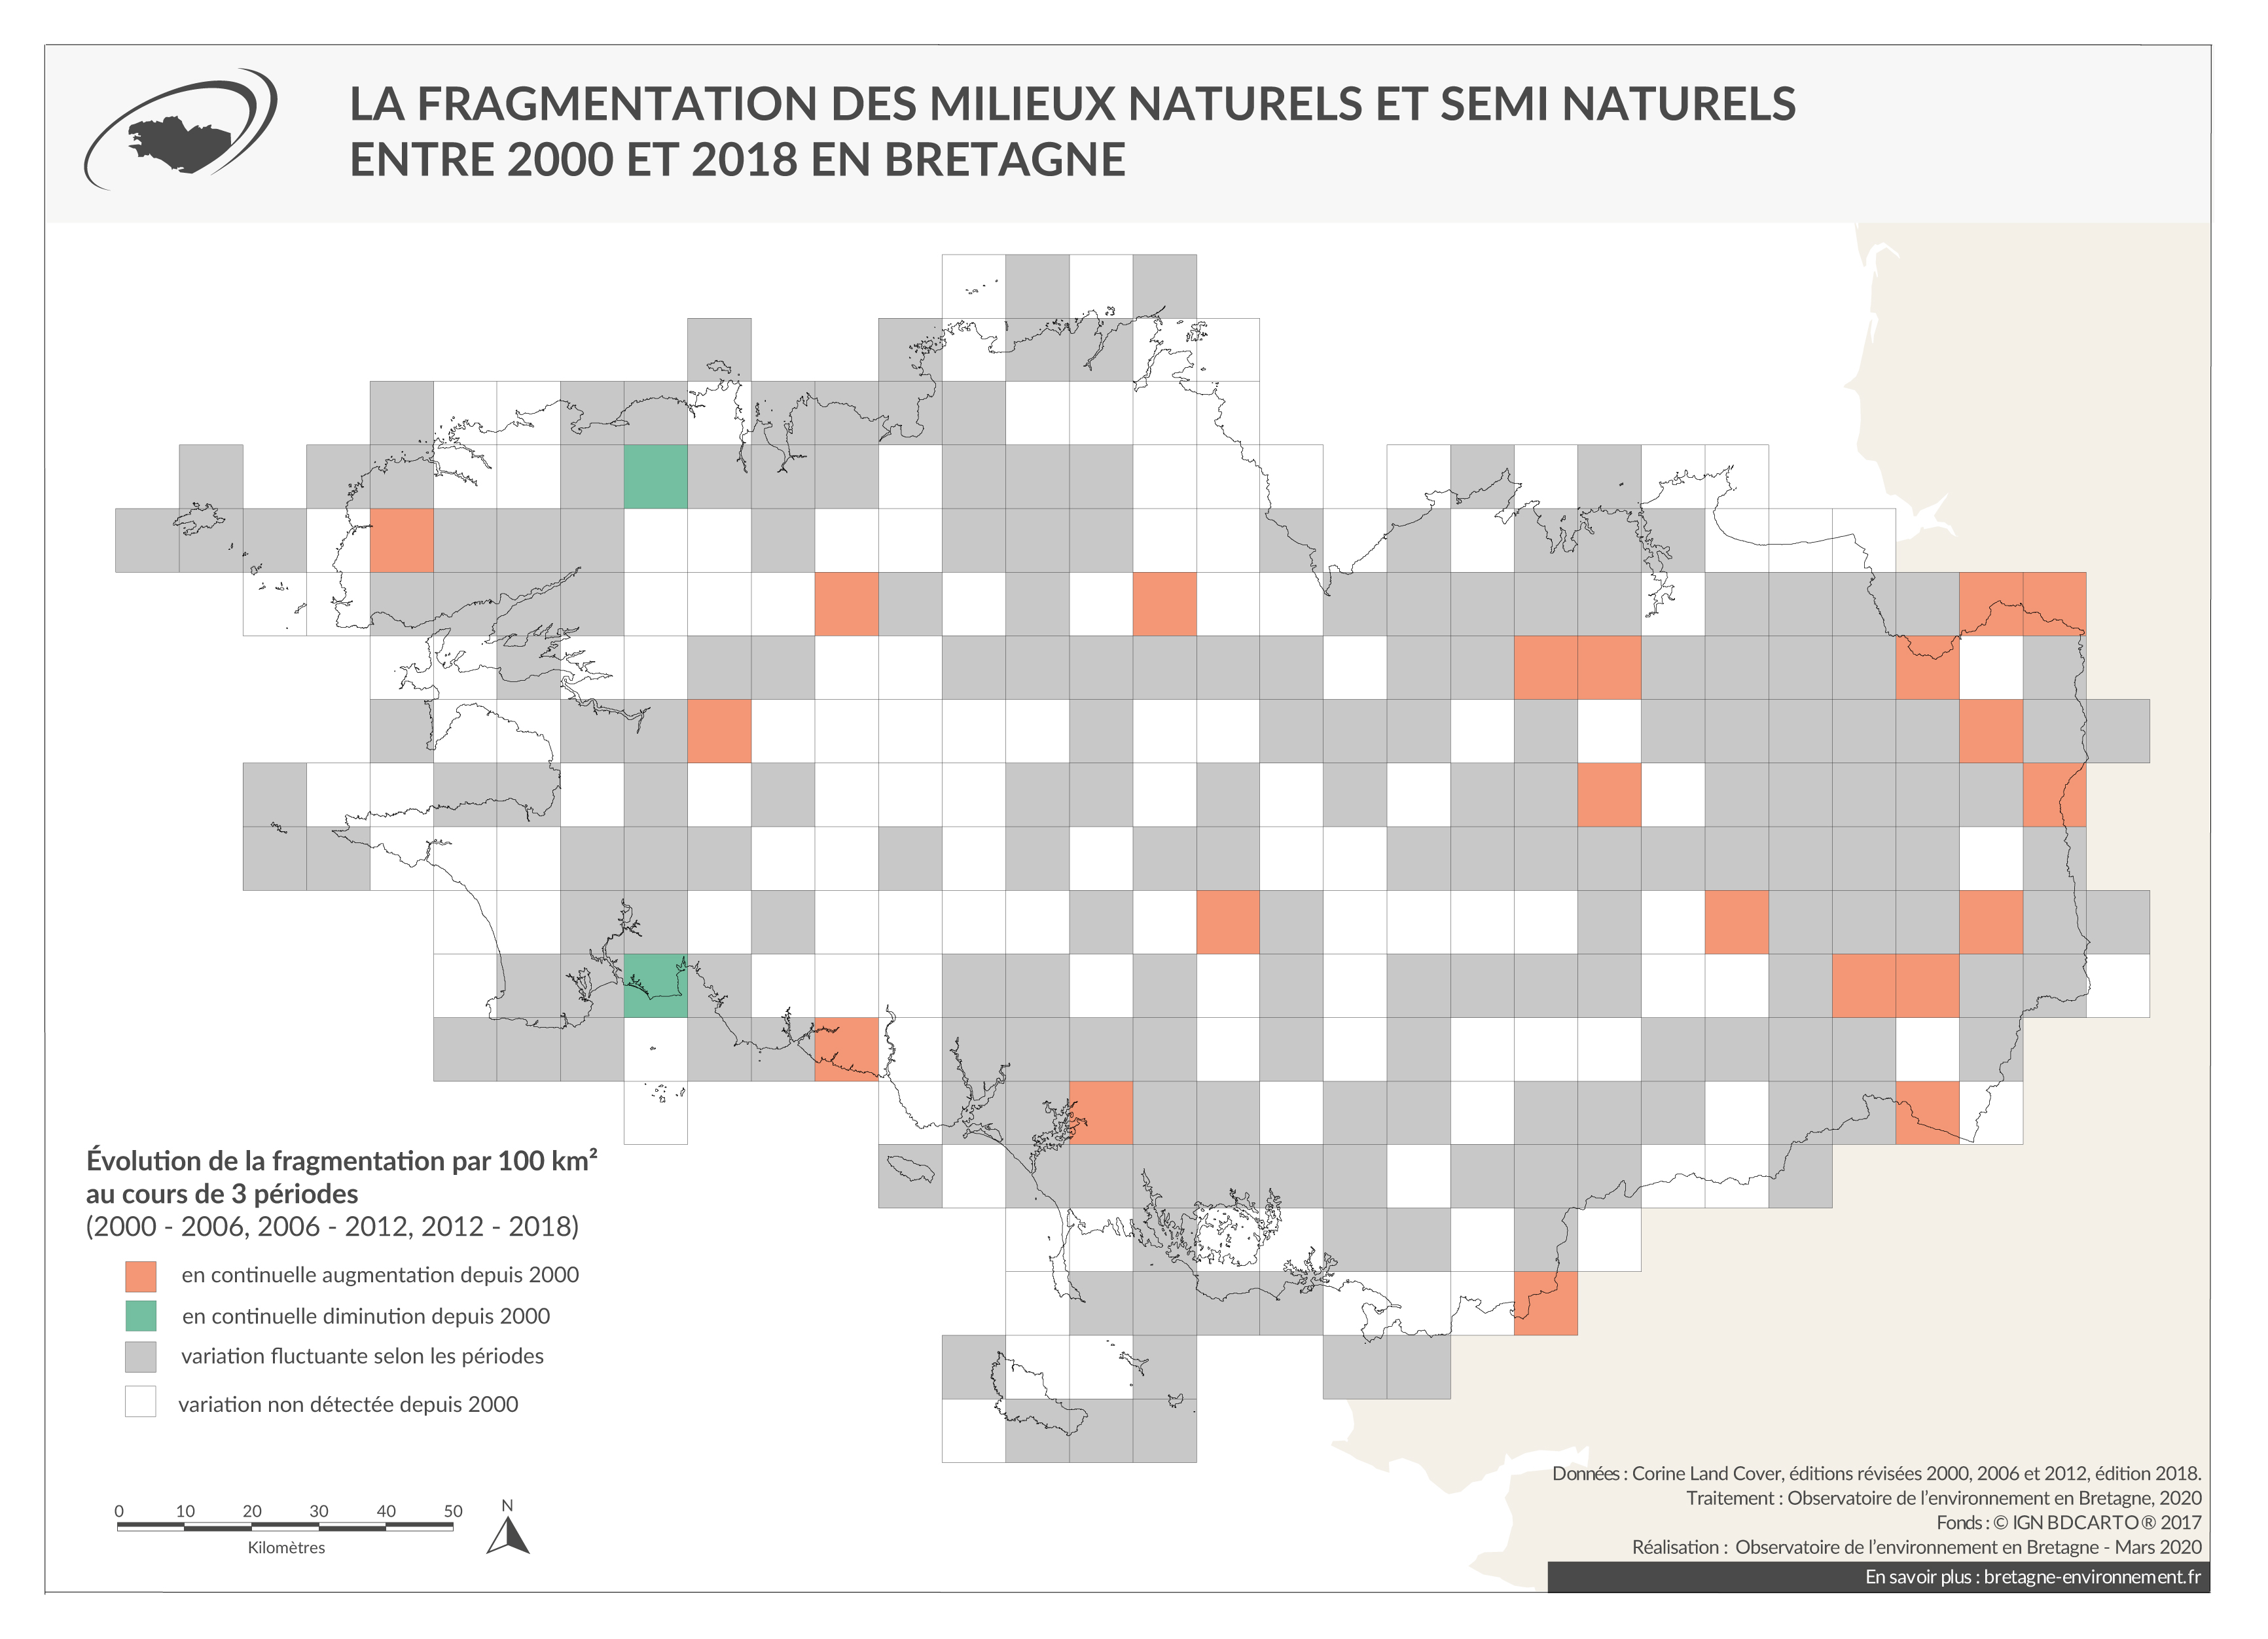 La fragmentation des milieux naturels naturels et semi naturels entre 2000 et 2018